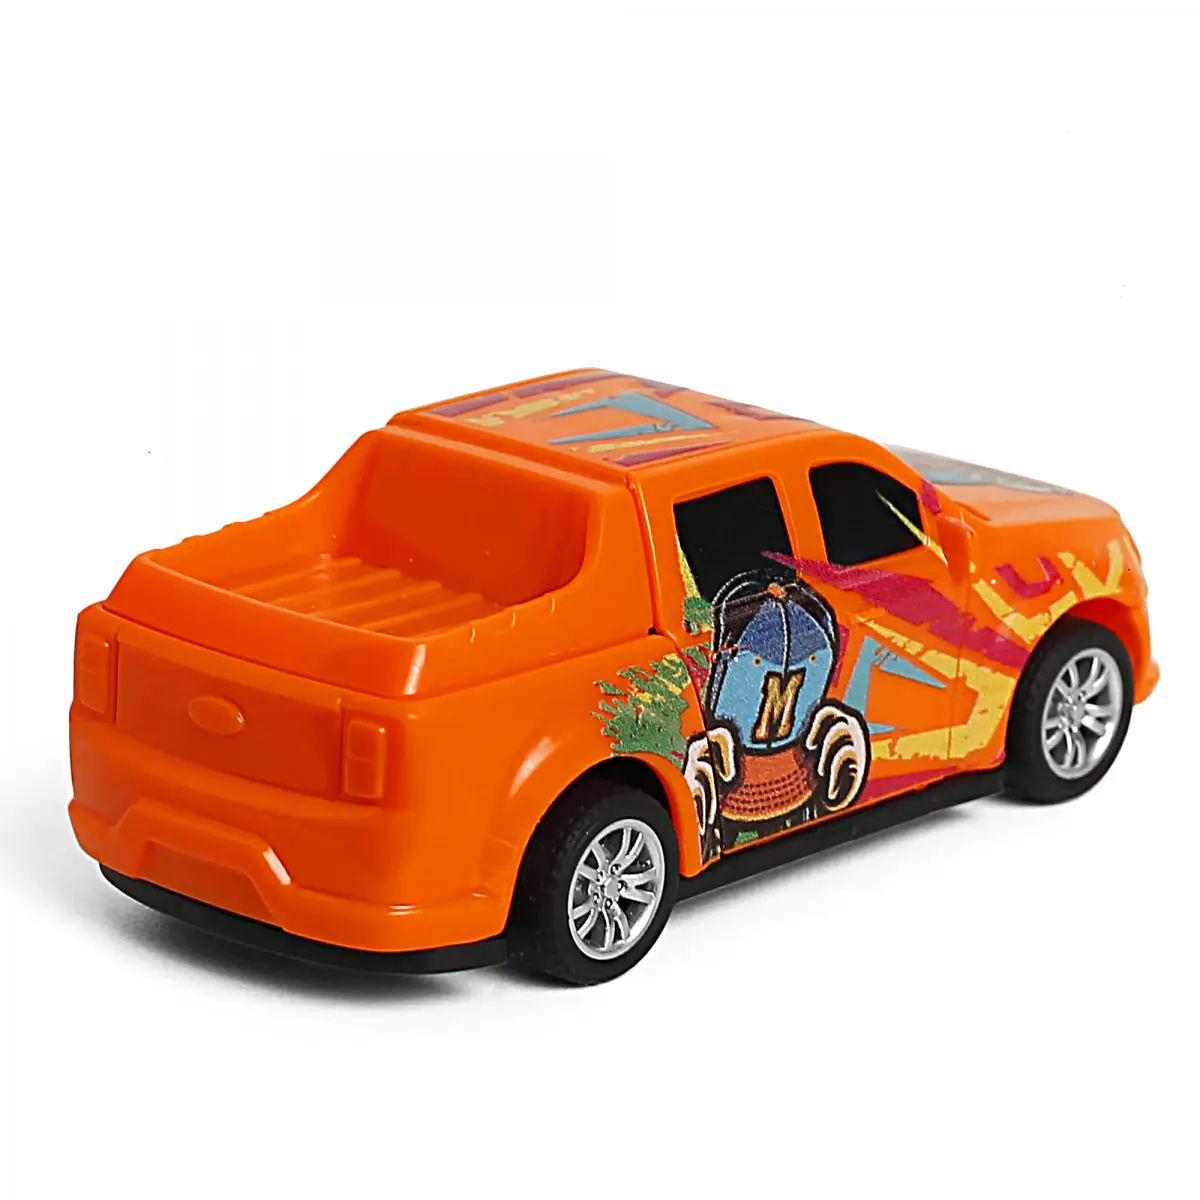 Ralleyz Pull Back Crash Car, 2 Modes Racing Stunt Vehicle Toy, Crash Car, Racing Toy, Friction High Speed Car, Kids for 3Y+, Orange